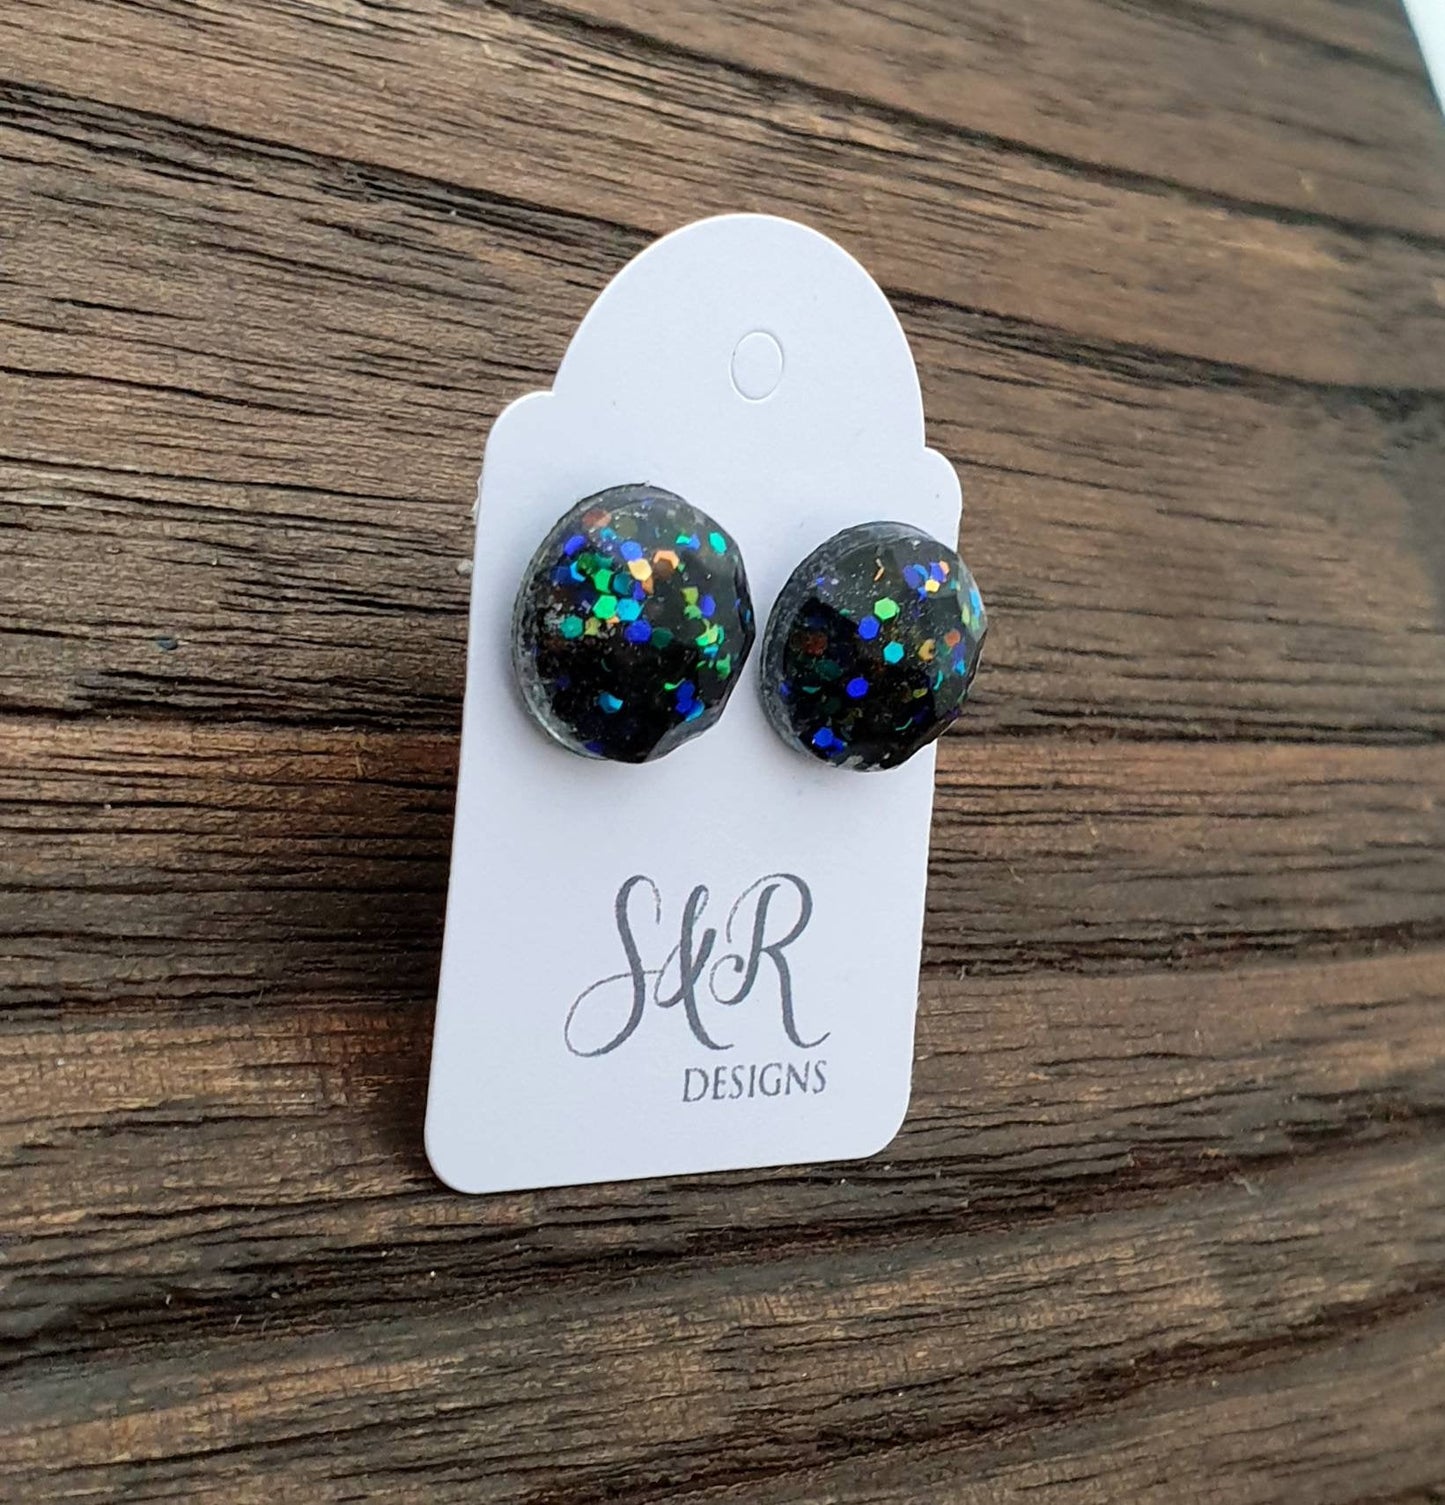 Faceted Circle Resin Stud Earrings, Black Rainbow Glitter Mix Stainless Steel Stud Earrings. 12mm